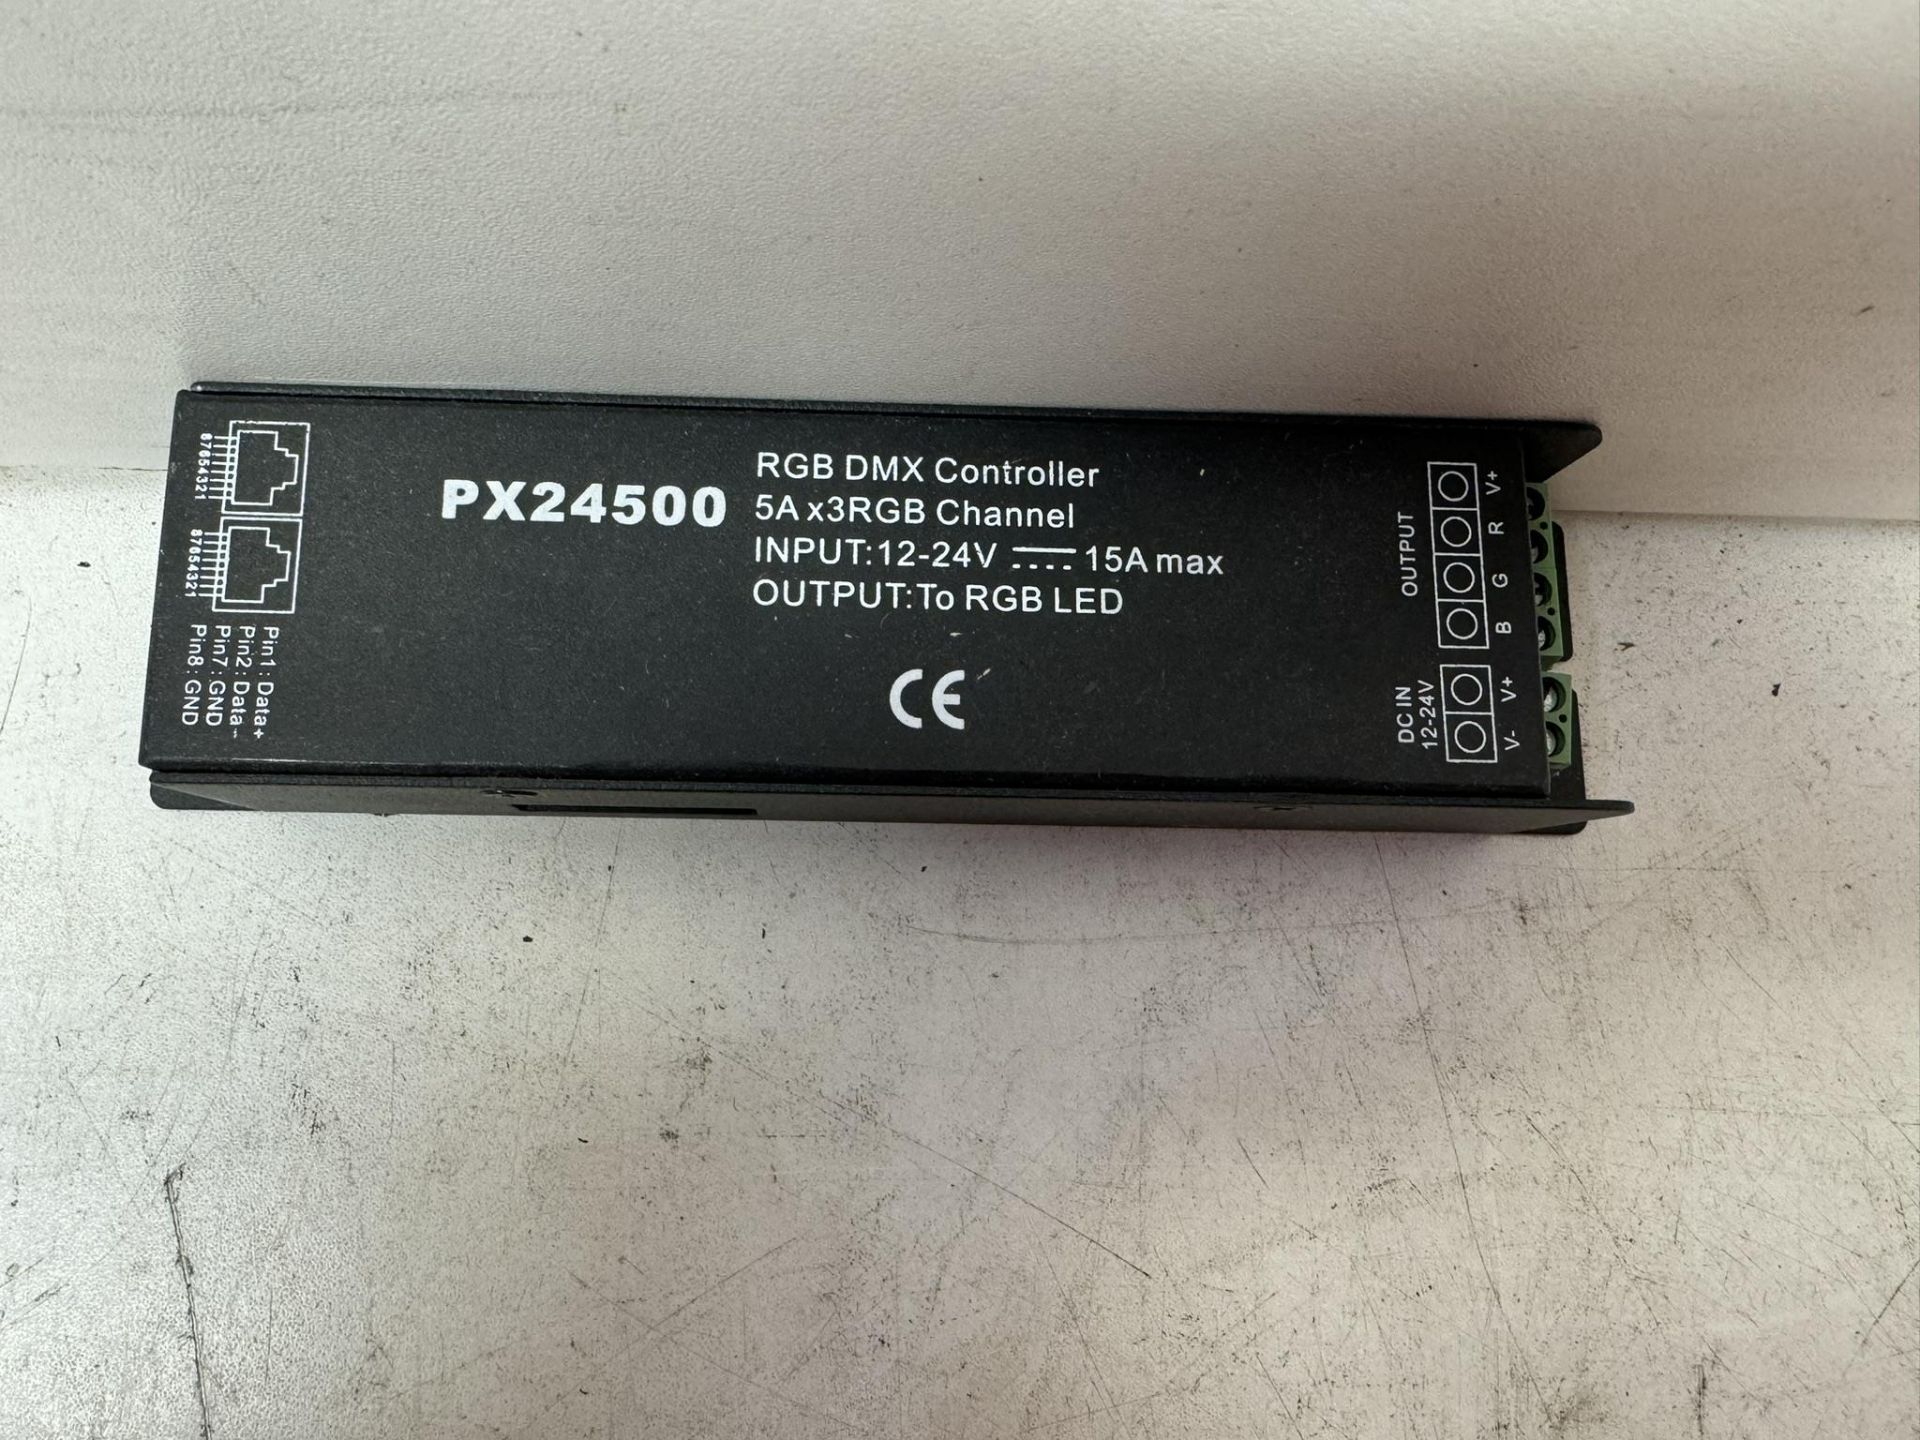 10 x PX24500 RGB DMX Controllers